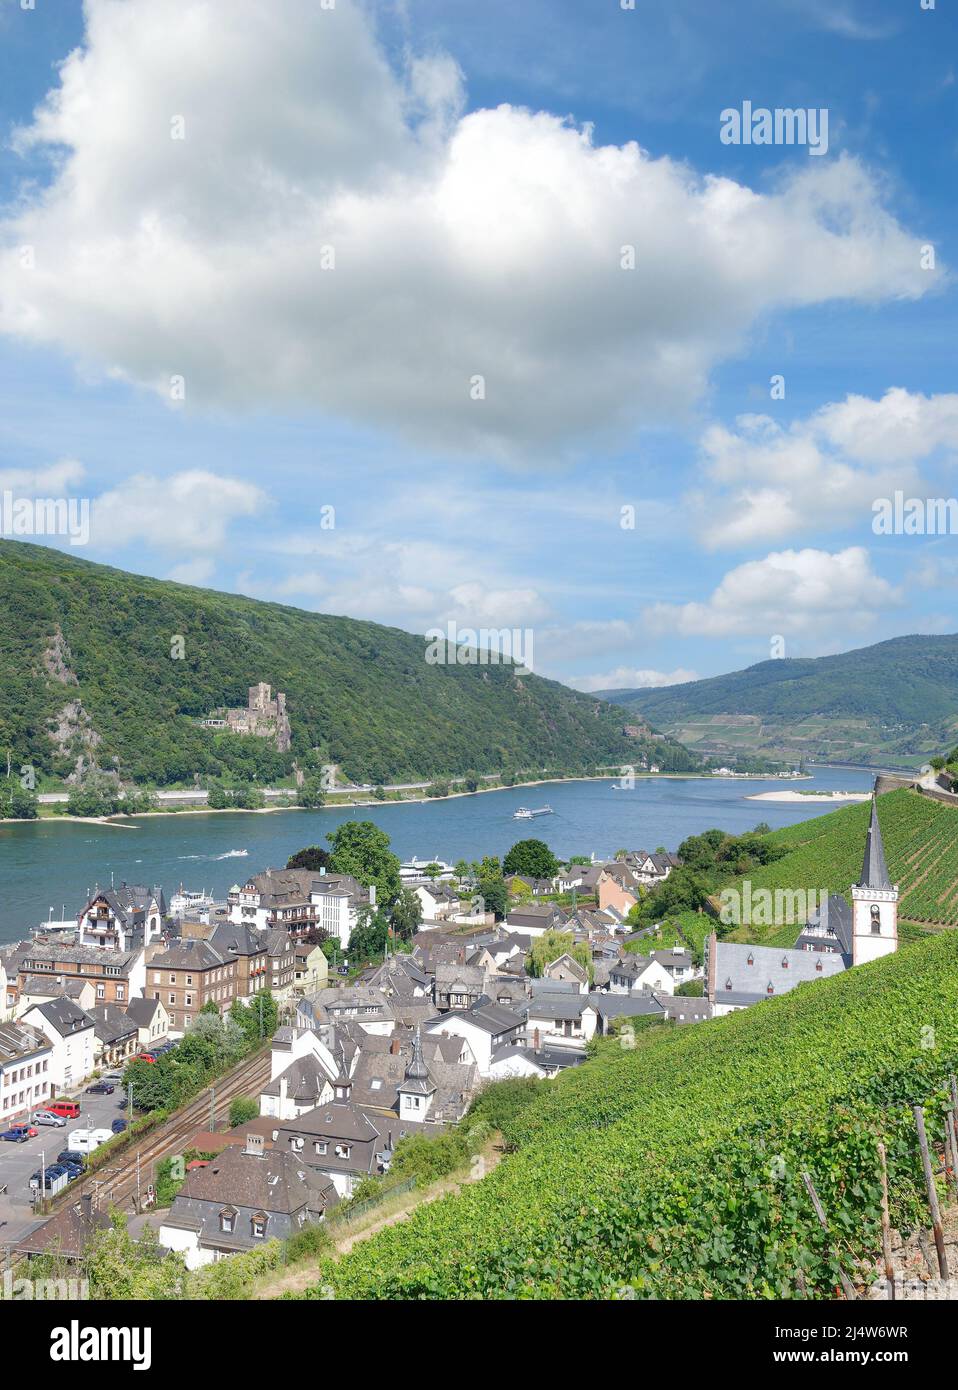 famous Wine Village of Assmannshausen in Rheingau,Rhine River,Germany Stock Photo